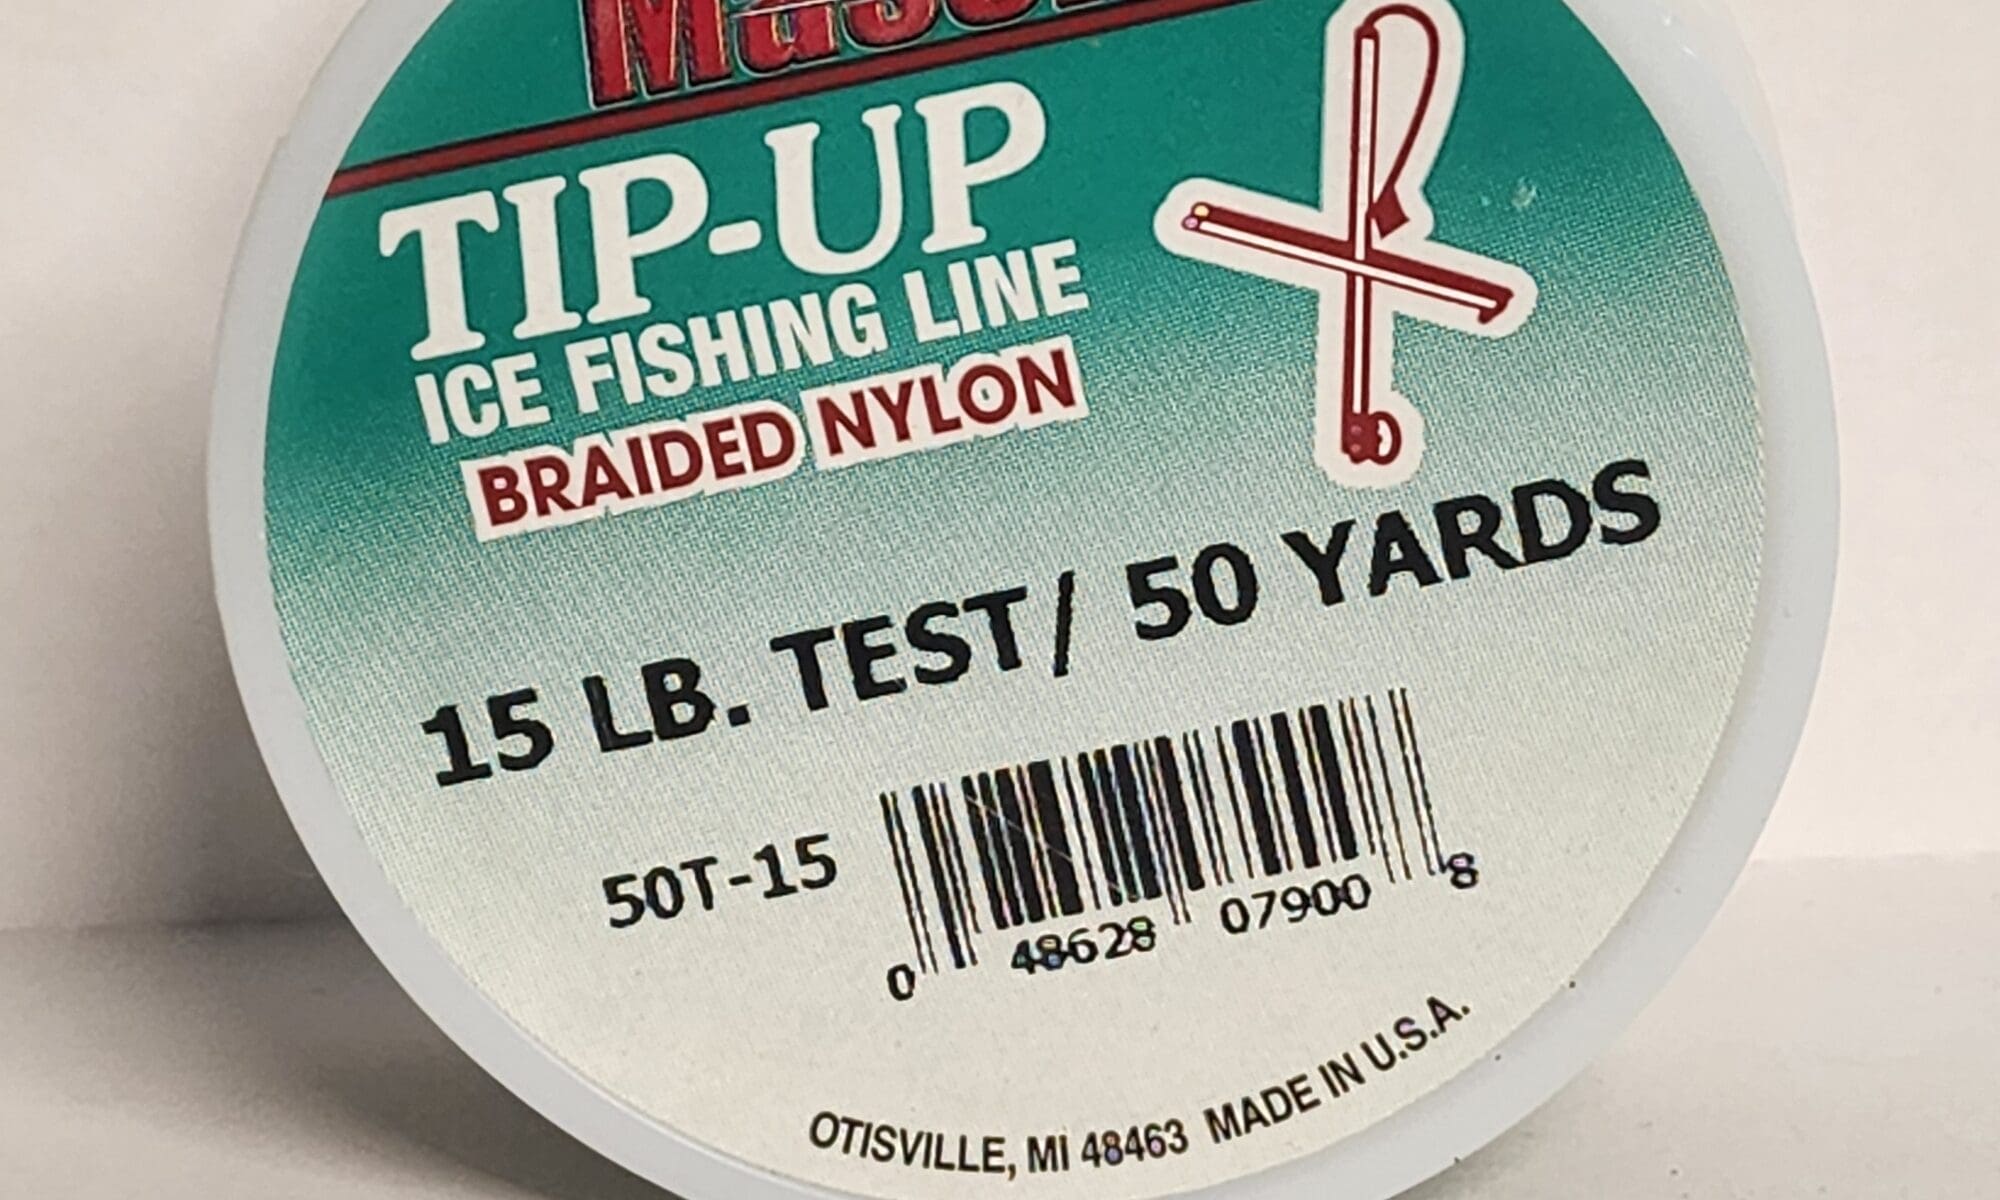 Mason Tip-Up Ice Fishing Line, Braided Nylon, Green, 15# Test 50